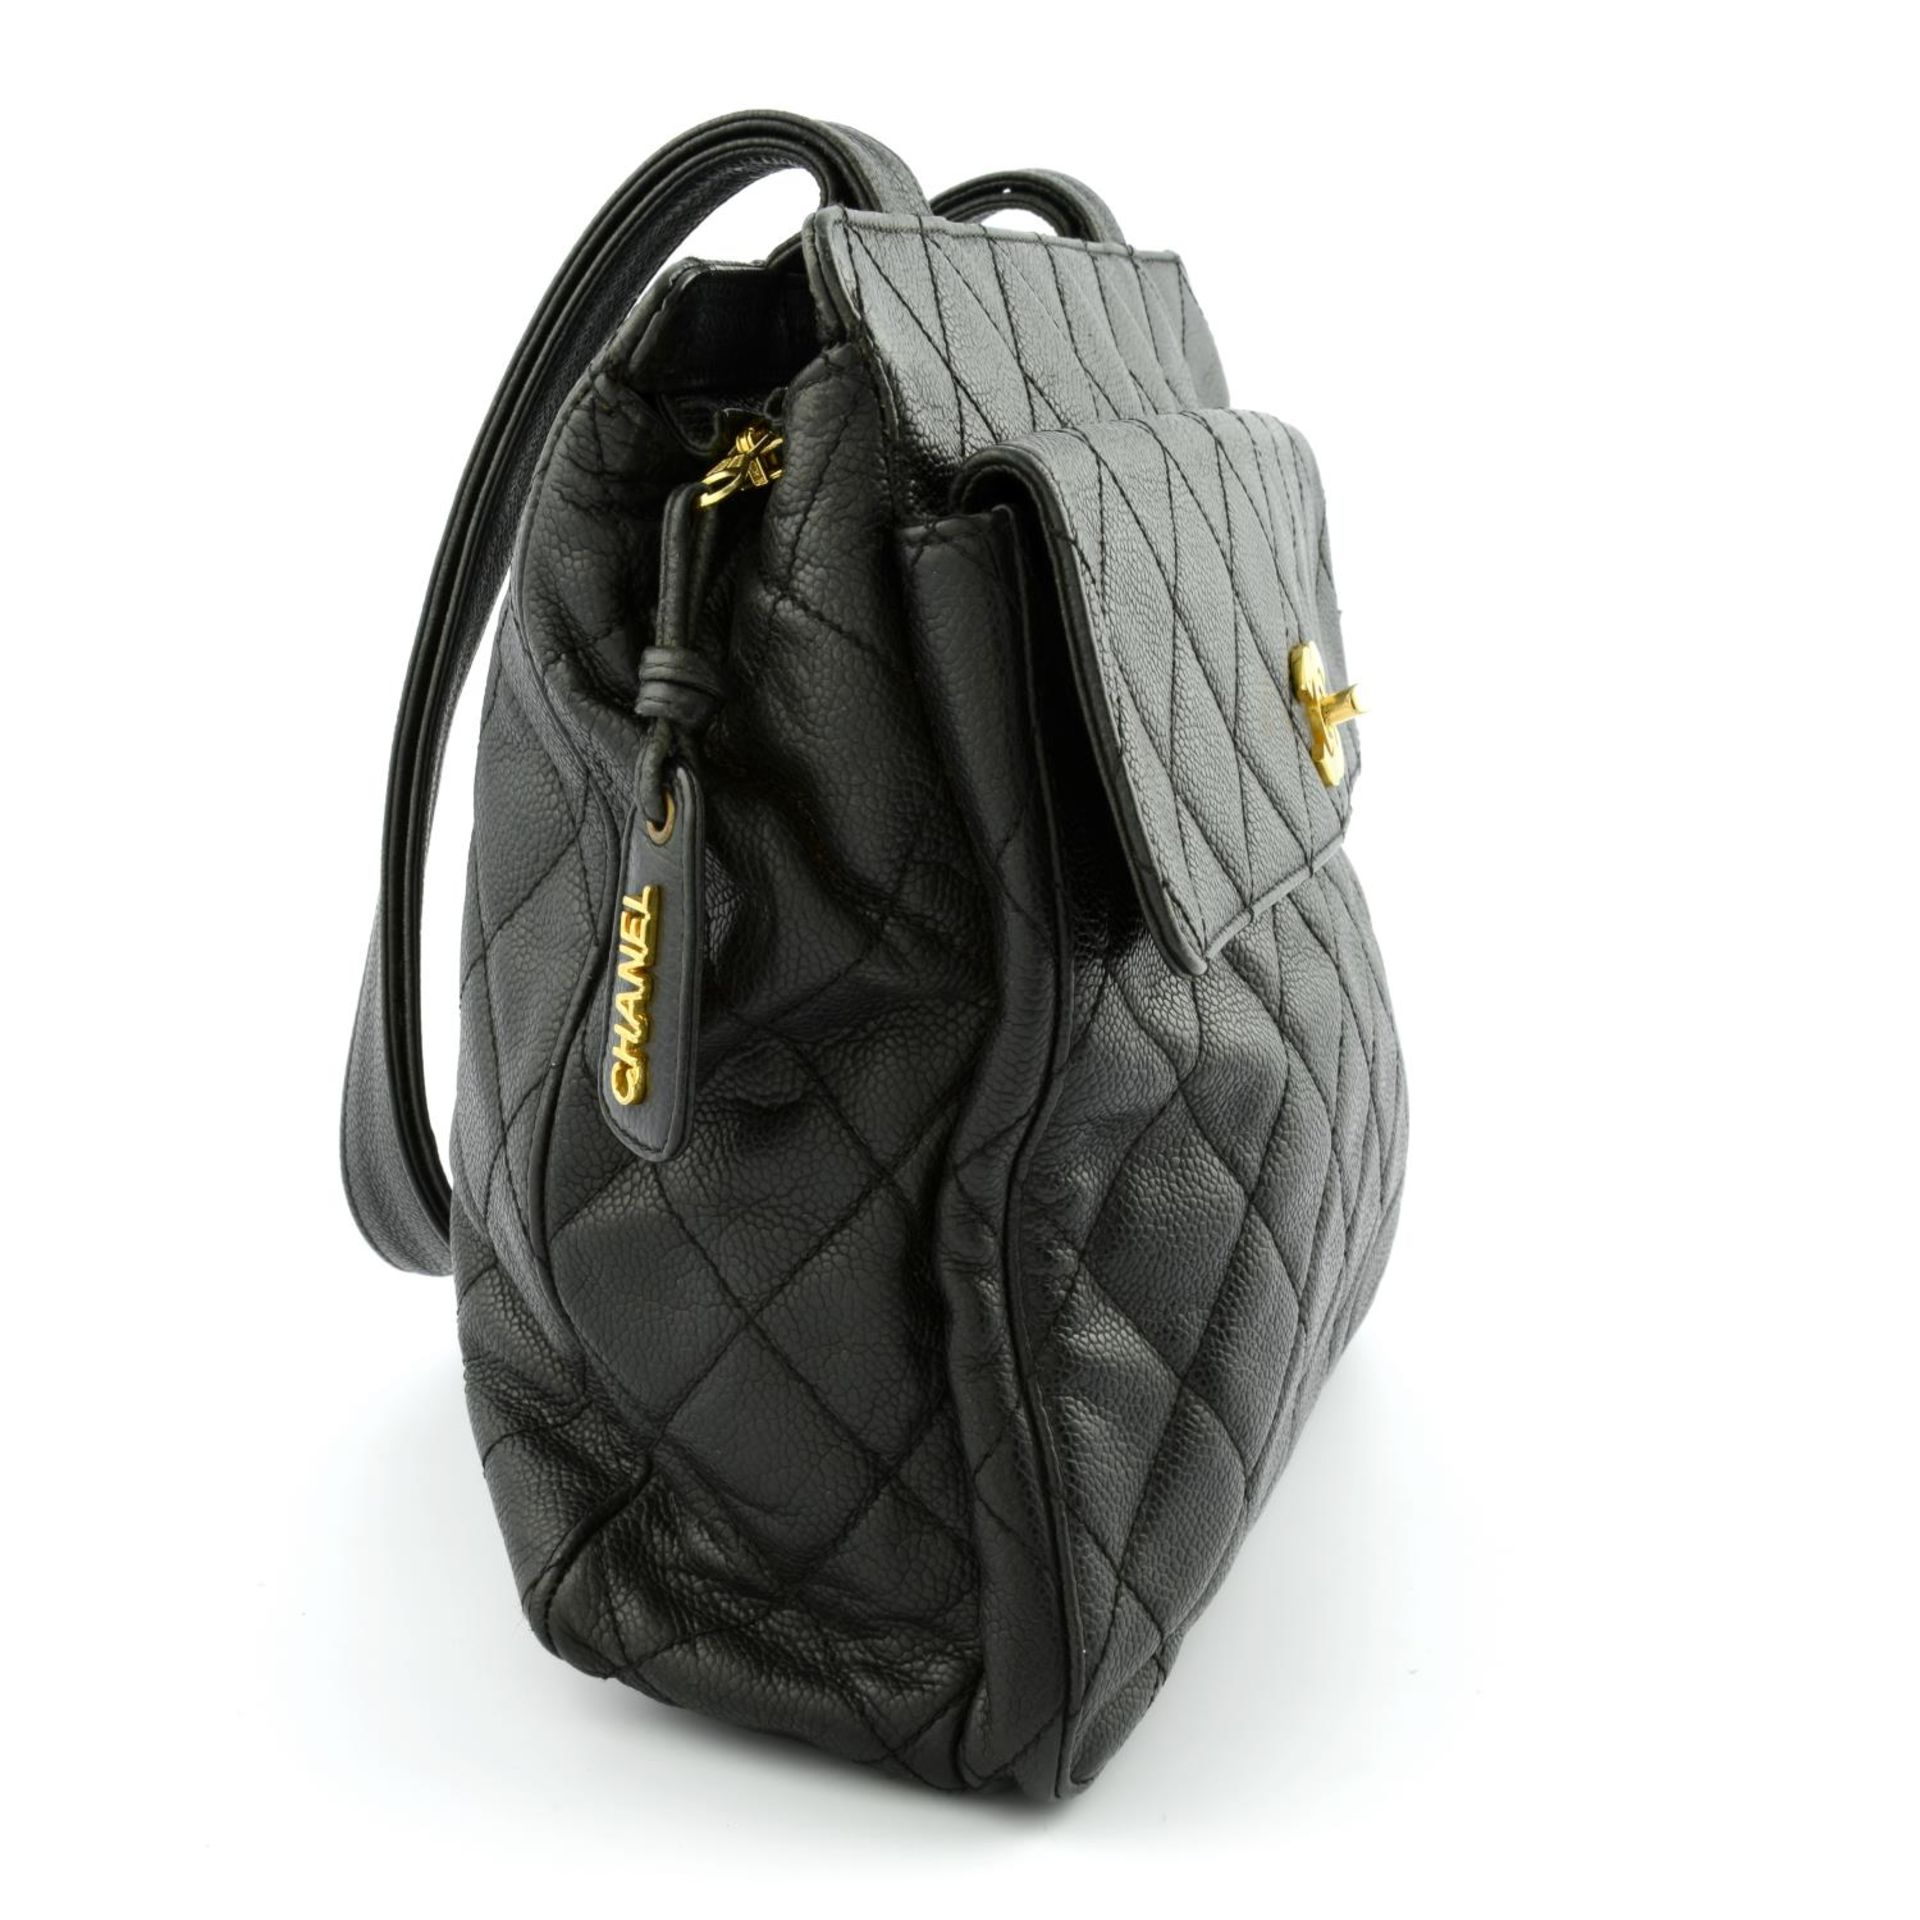 CHANEL - a vintage black caviar leather Petite Shopping Tote handbag. - Image 4 of 6